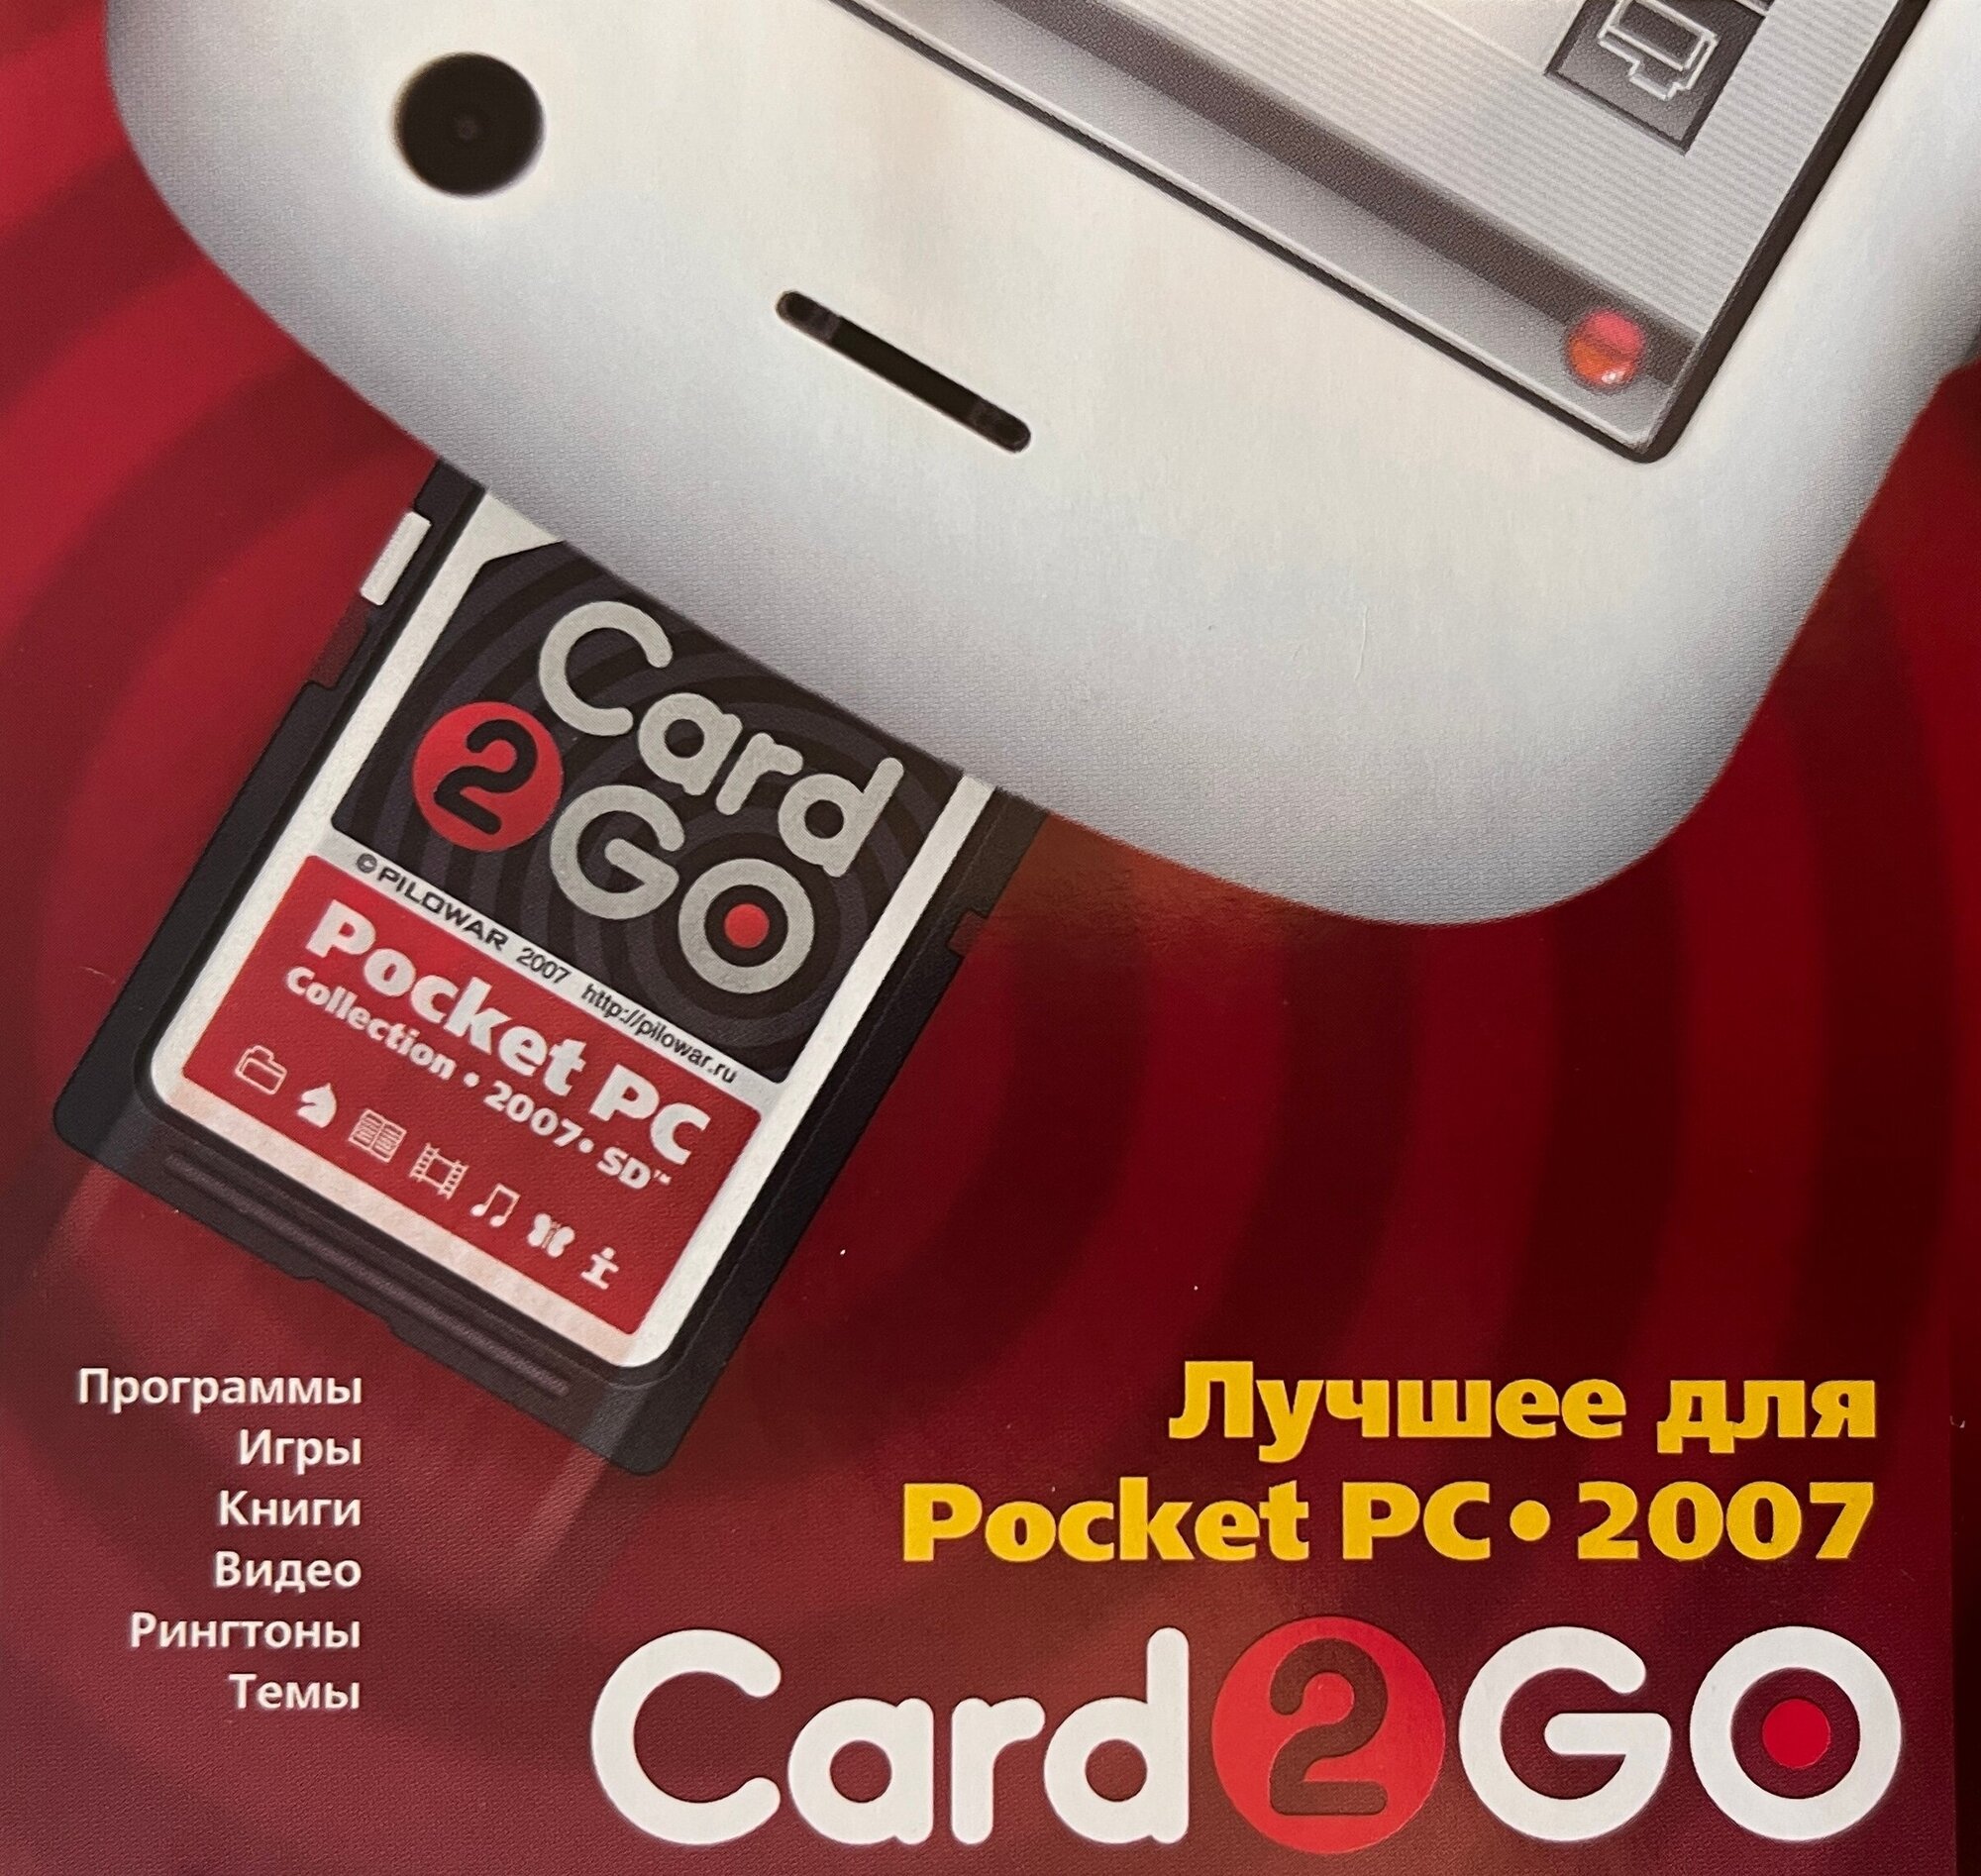 Cборник программ Pocket PC: Лучшее 2007. Card 2 GO